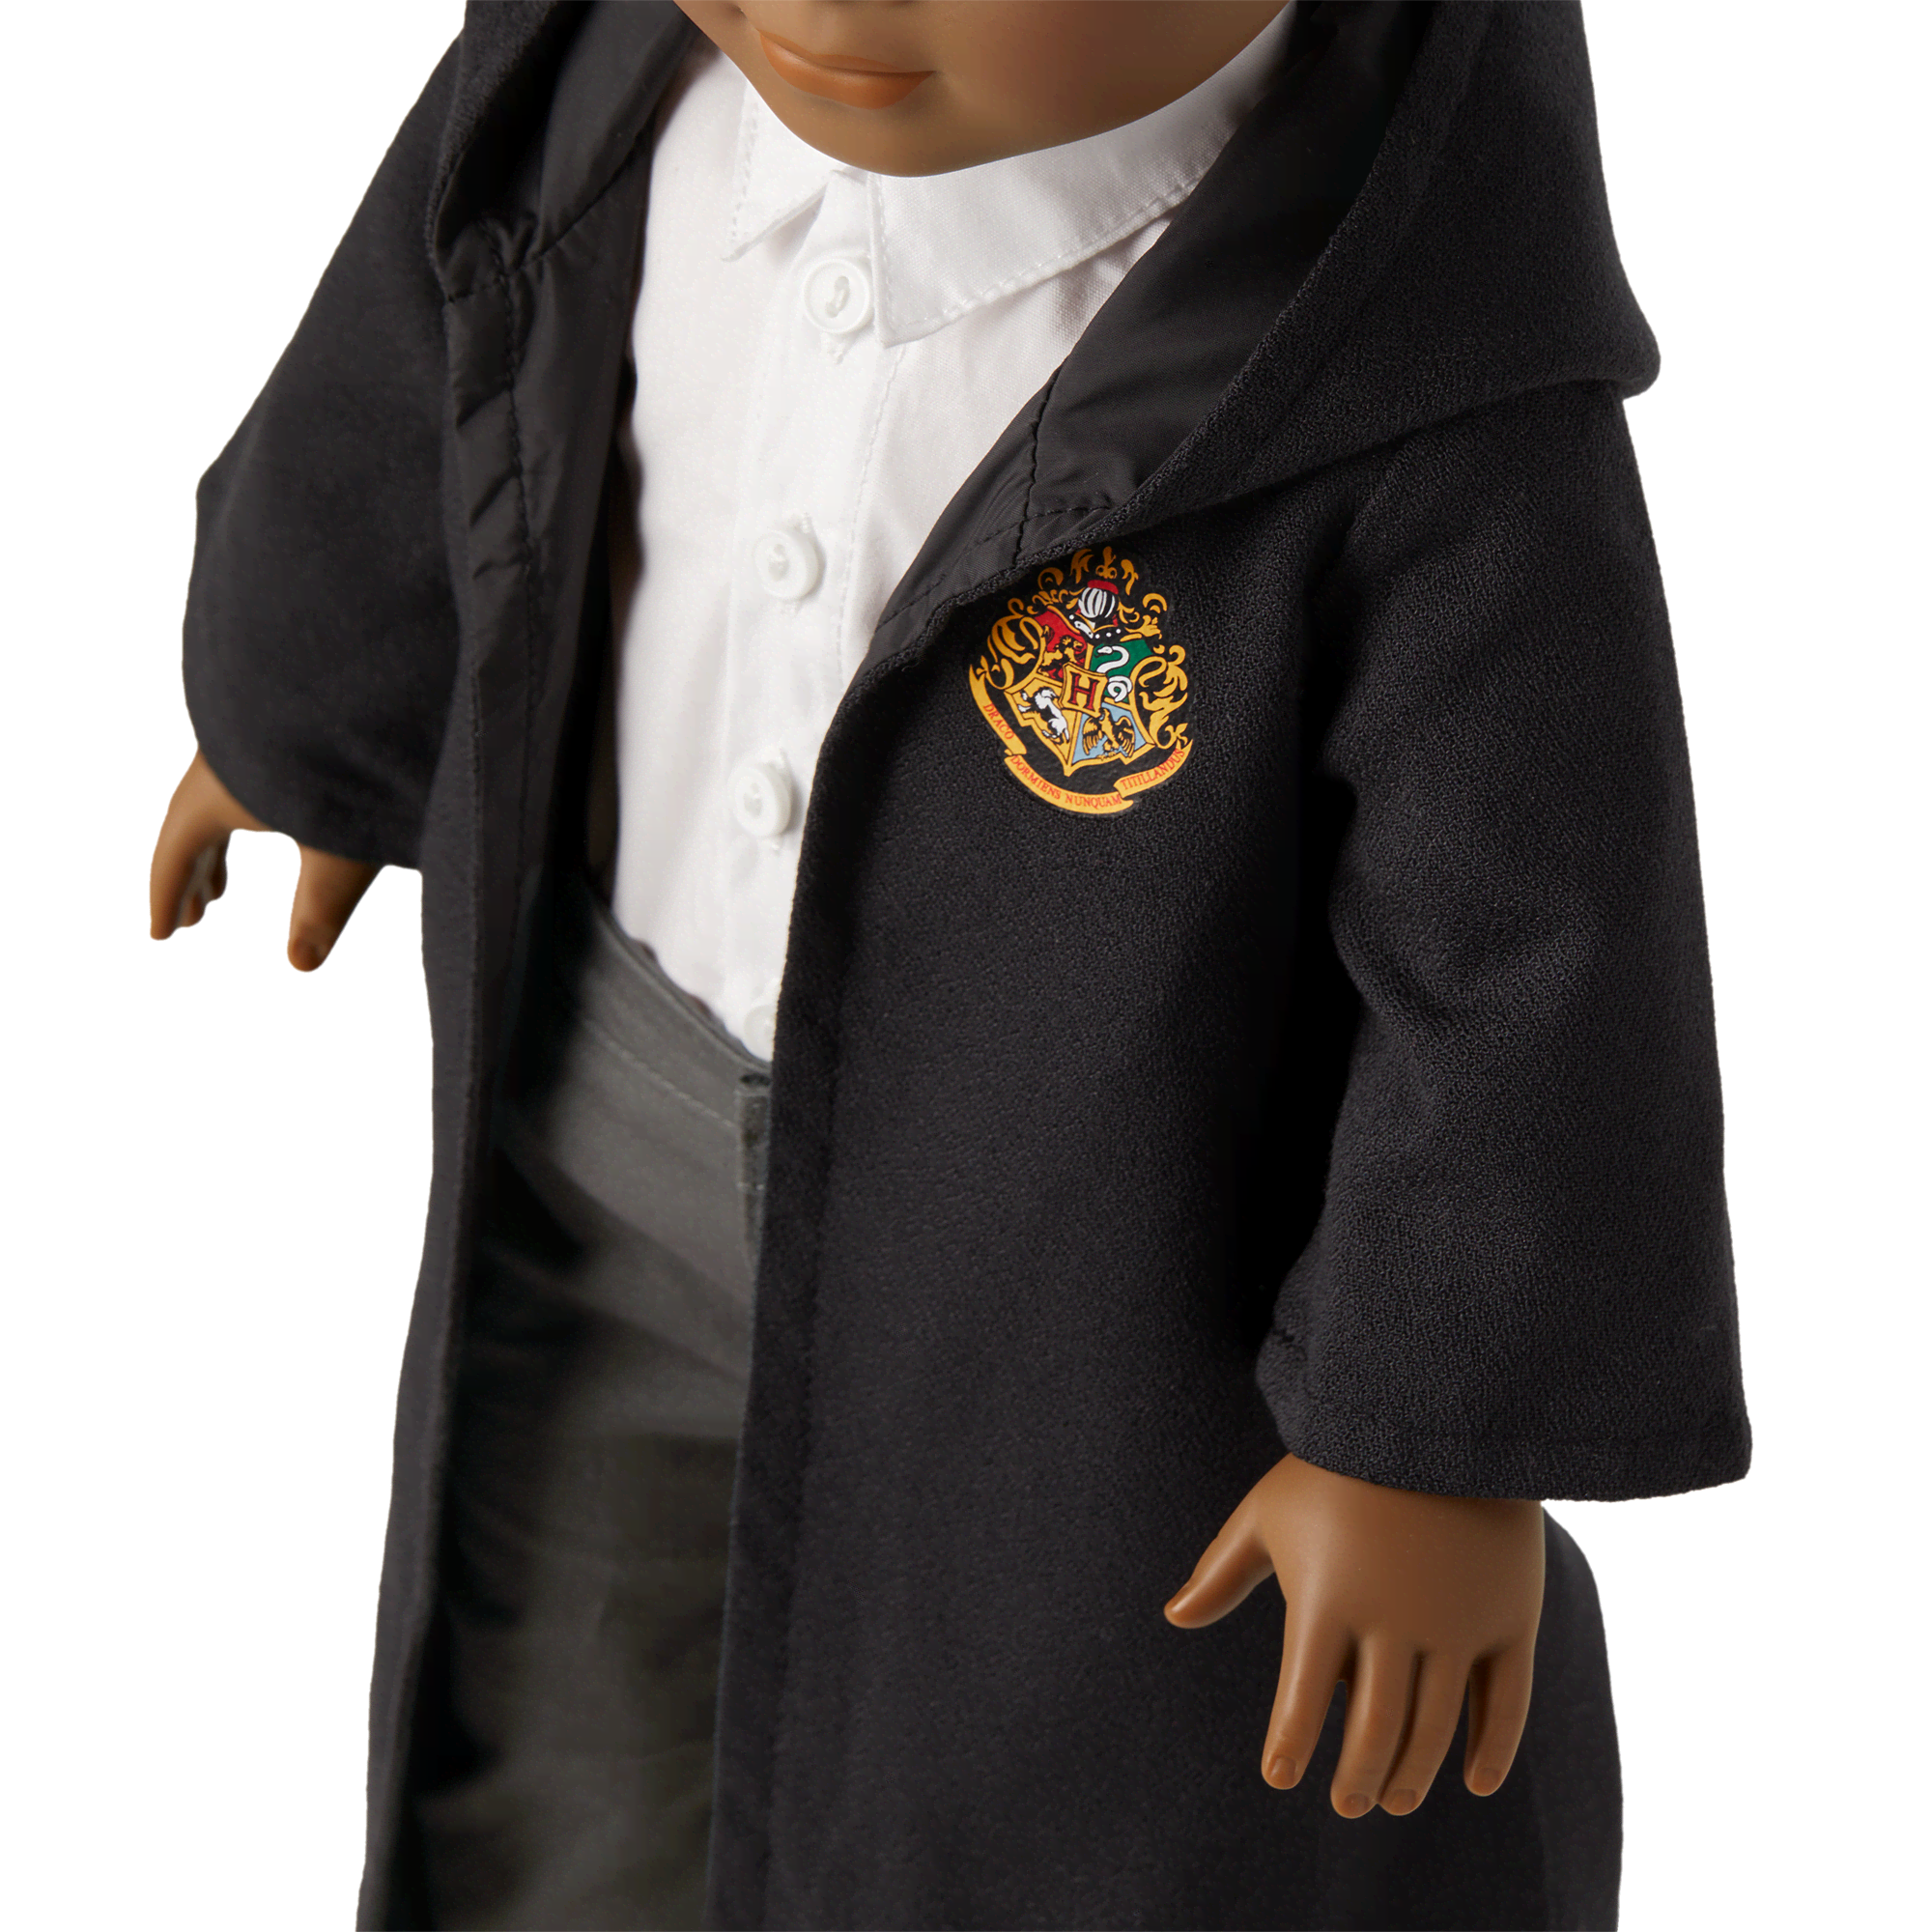 American Girl® Hogwarts™ Pants Uniform & Accessories